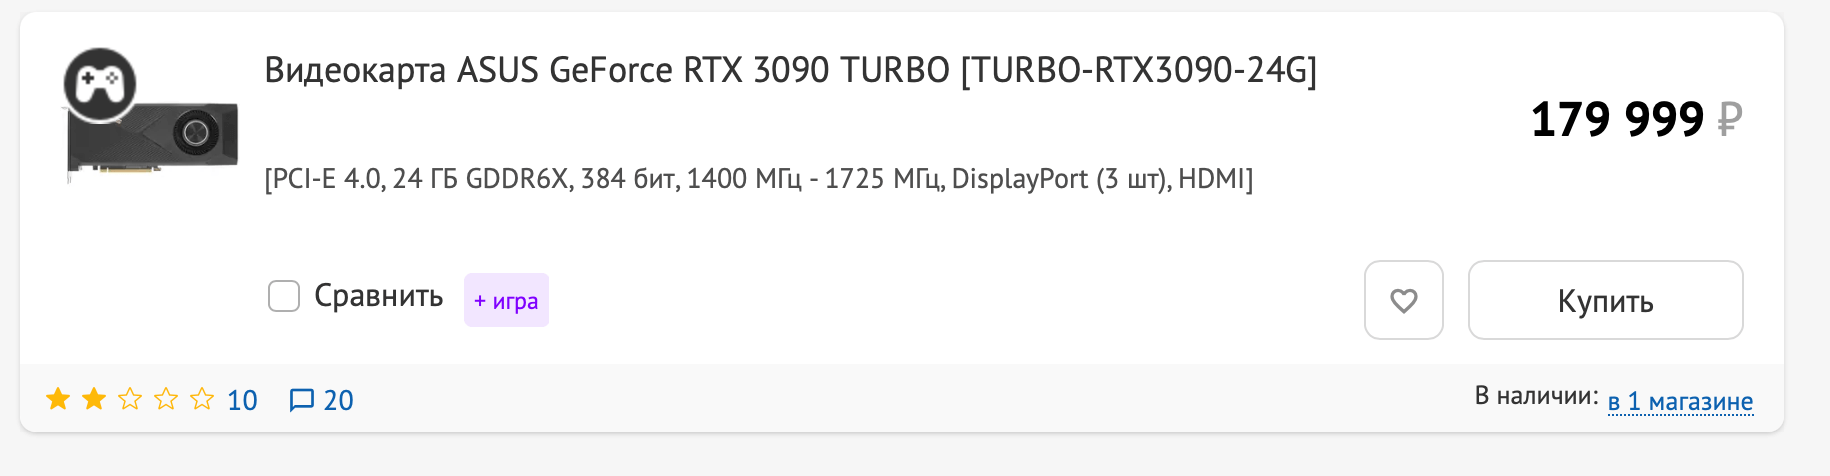 Наличие Nvidia RTX 3090